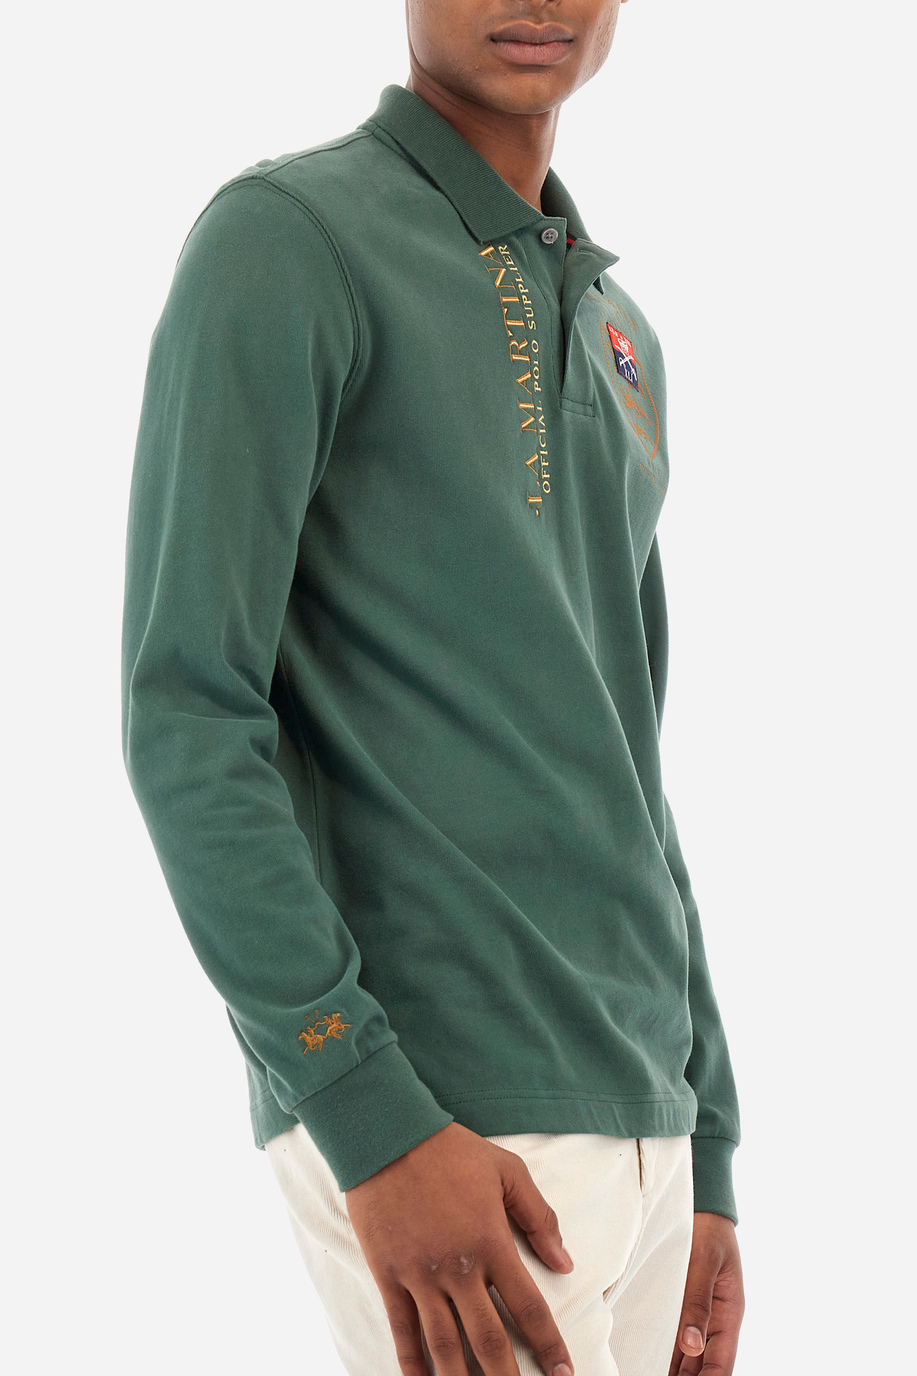 Man polo shirt in regular fit - Willian - Guards - England | La Martina - Official Online Shop